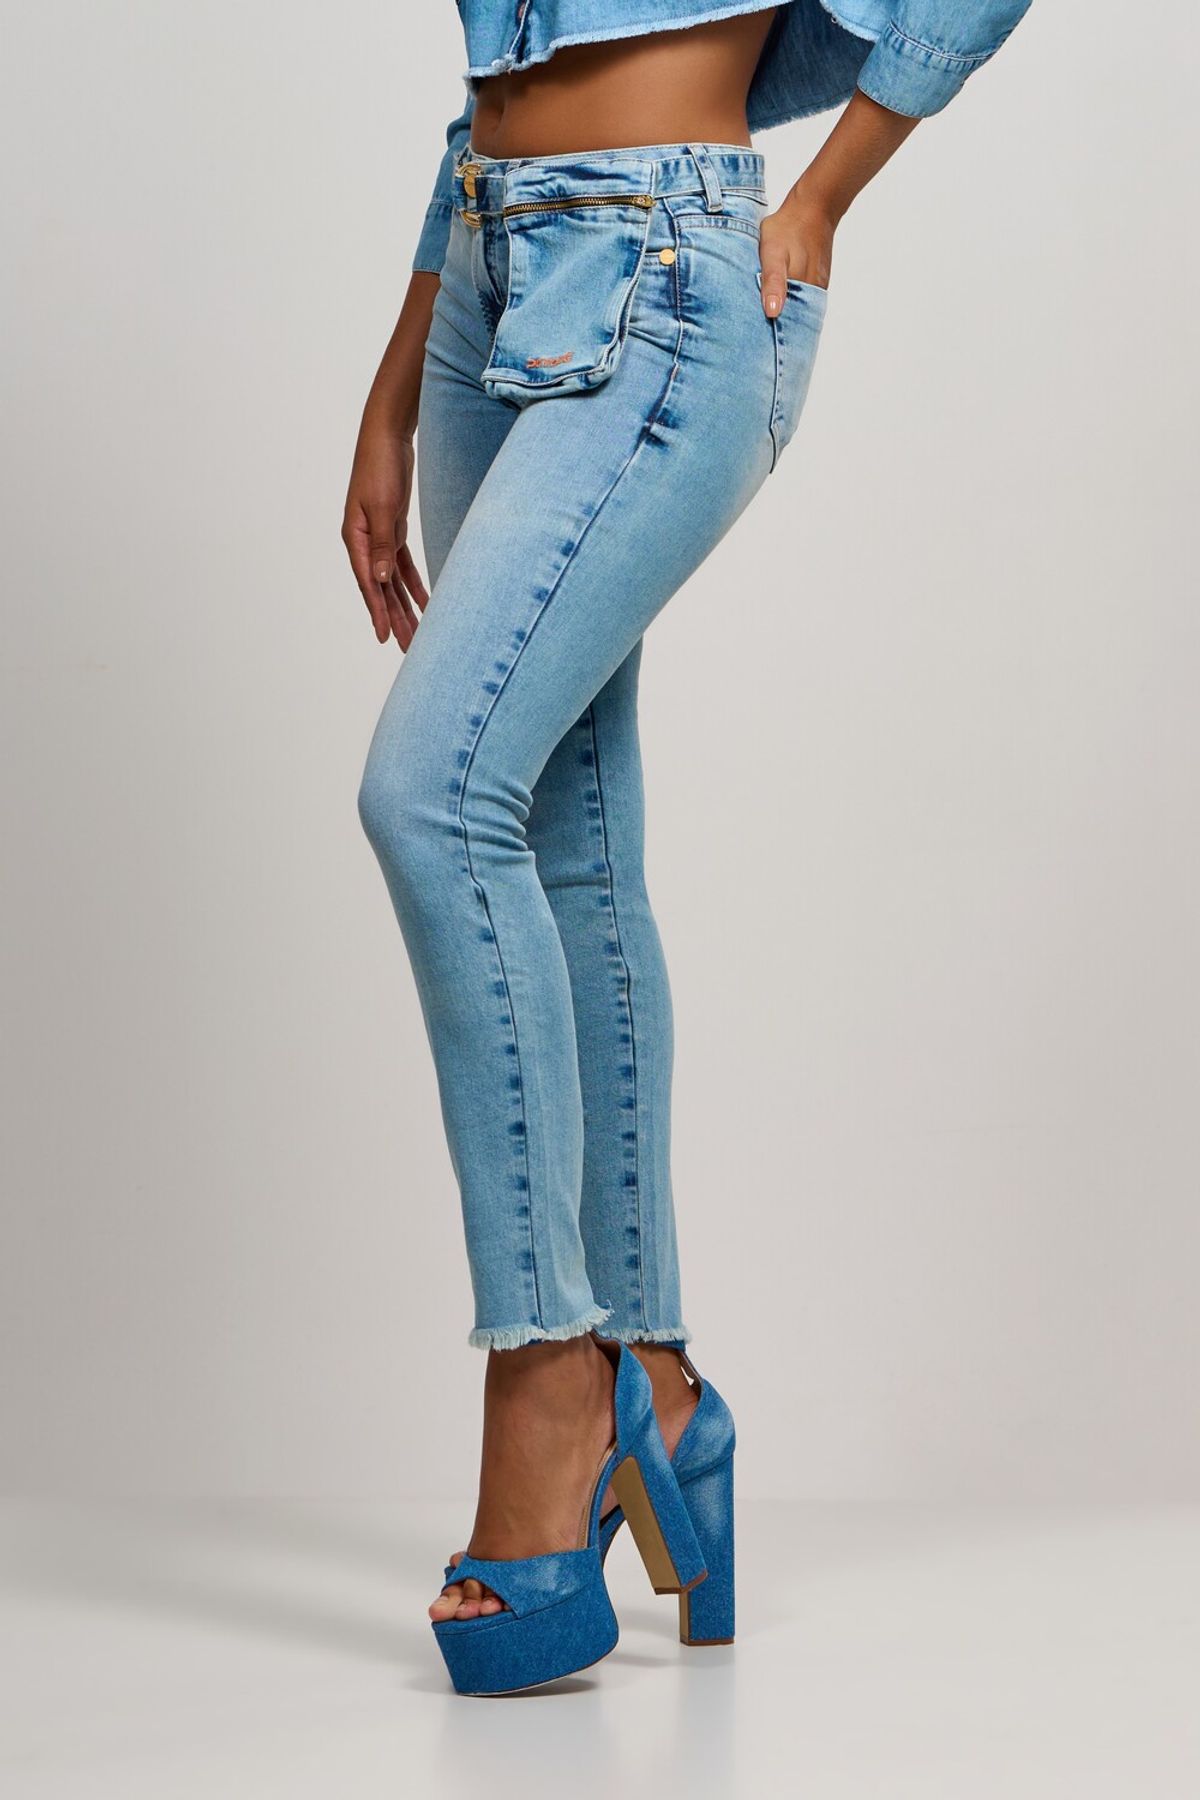 Calça Patogê feminina boot cut curvy jeans cintura média (G3) CL36680 -  patoge